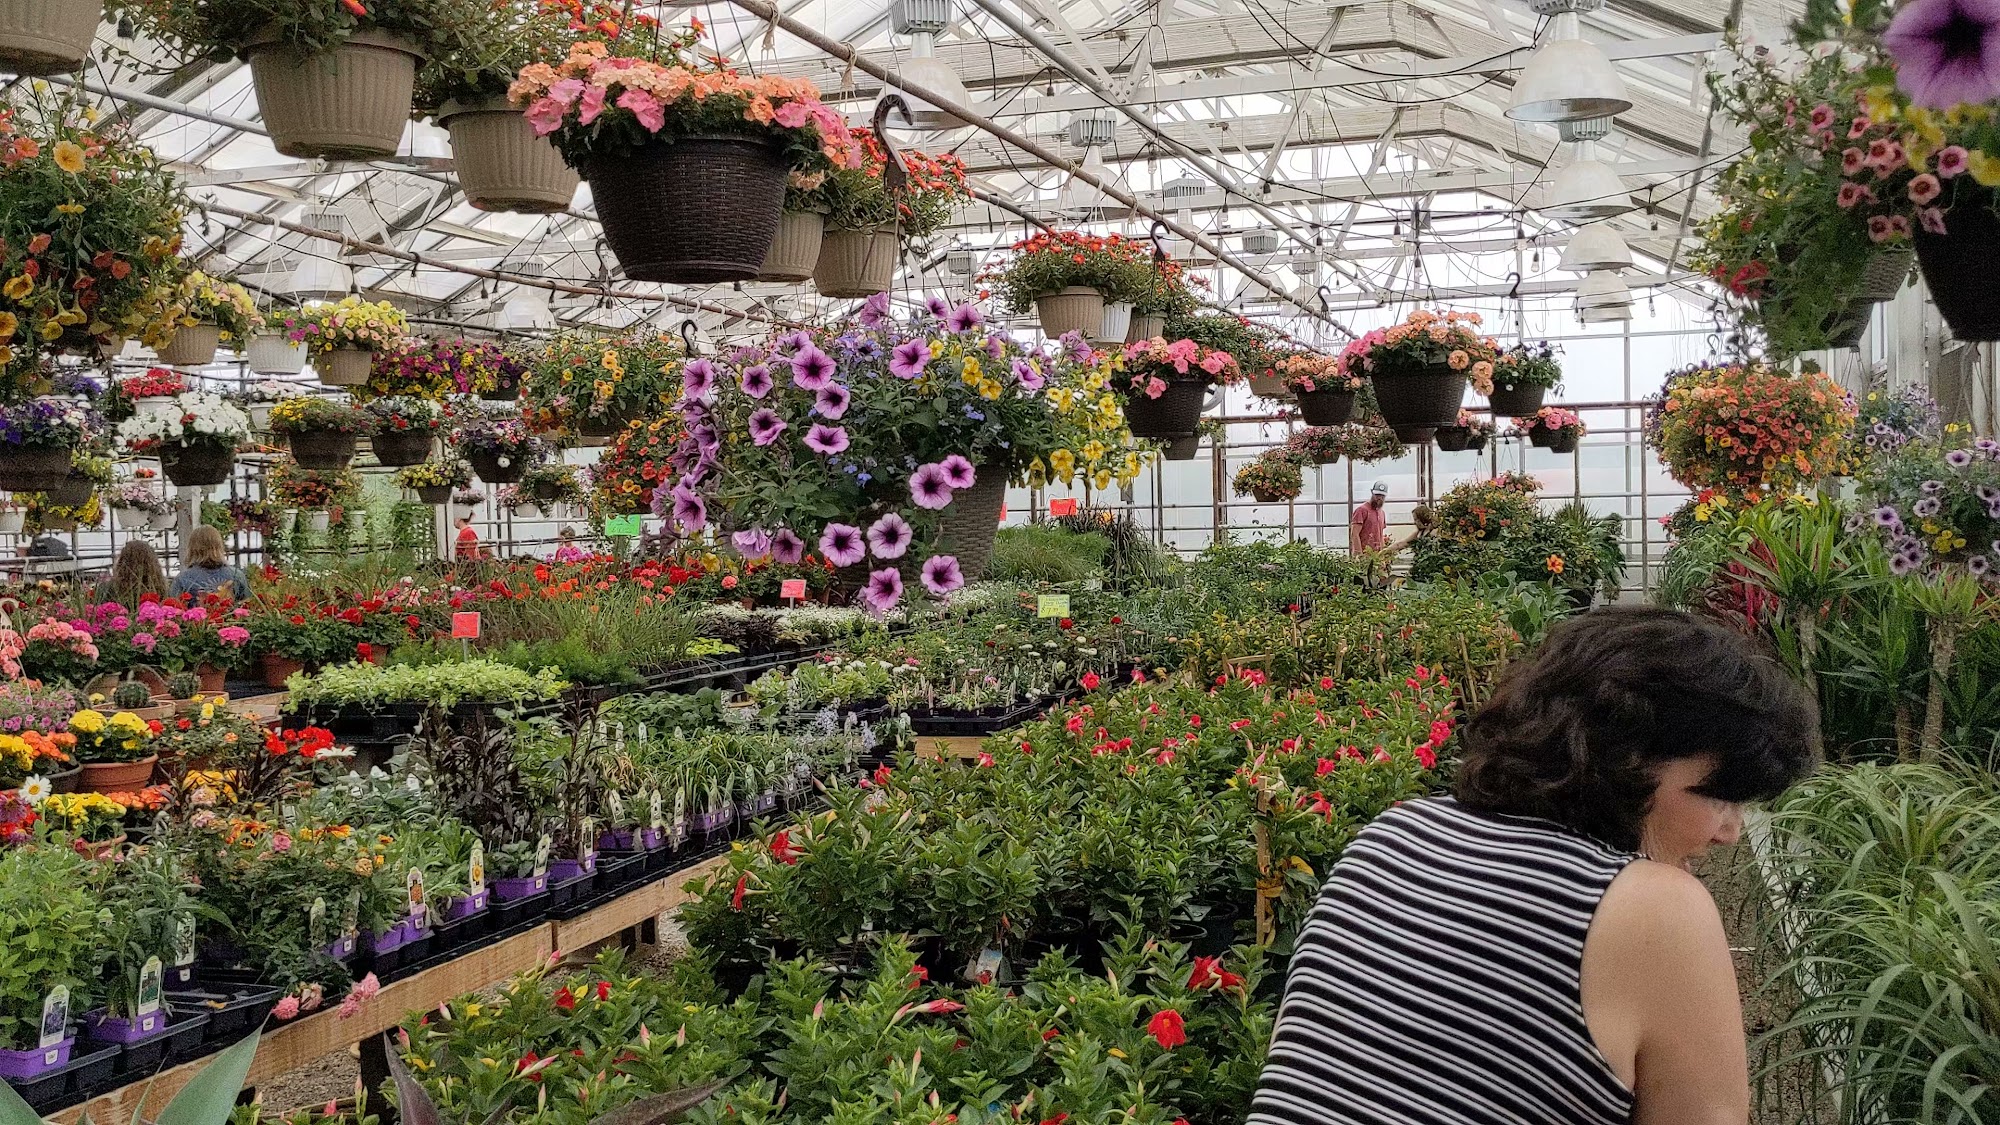 Salama Greenhouse & Floral 204 S Division St, Boone Iowa 50036